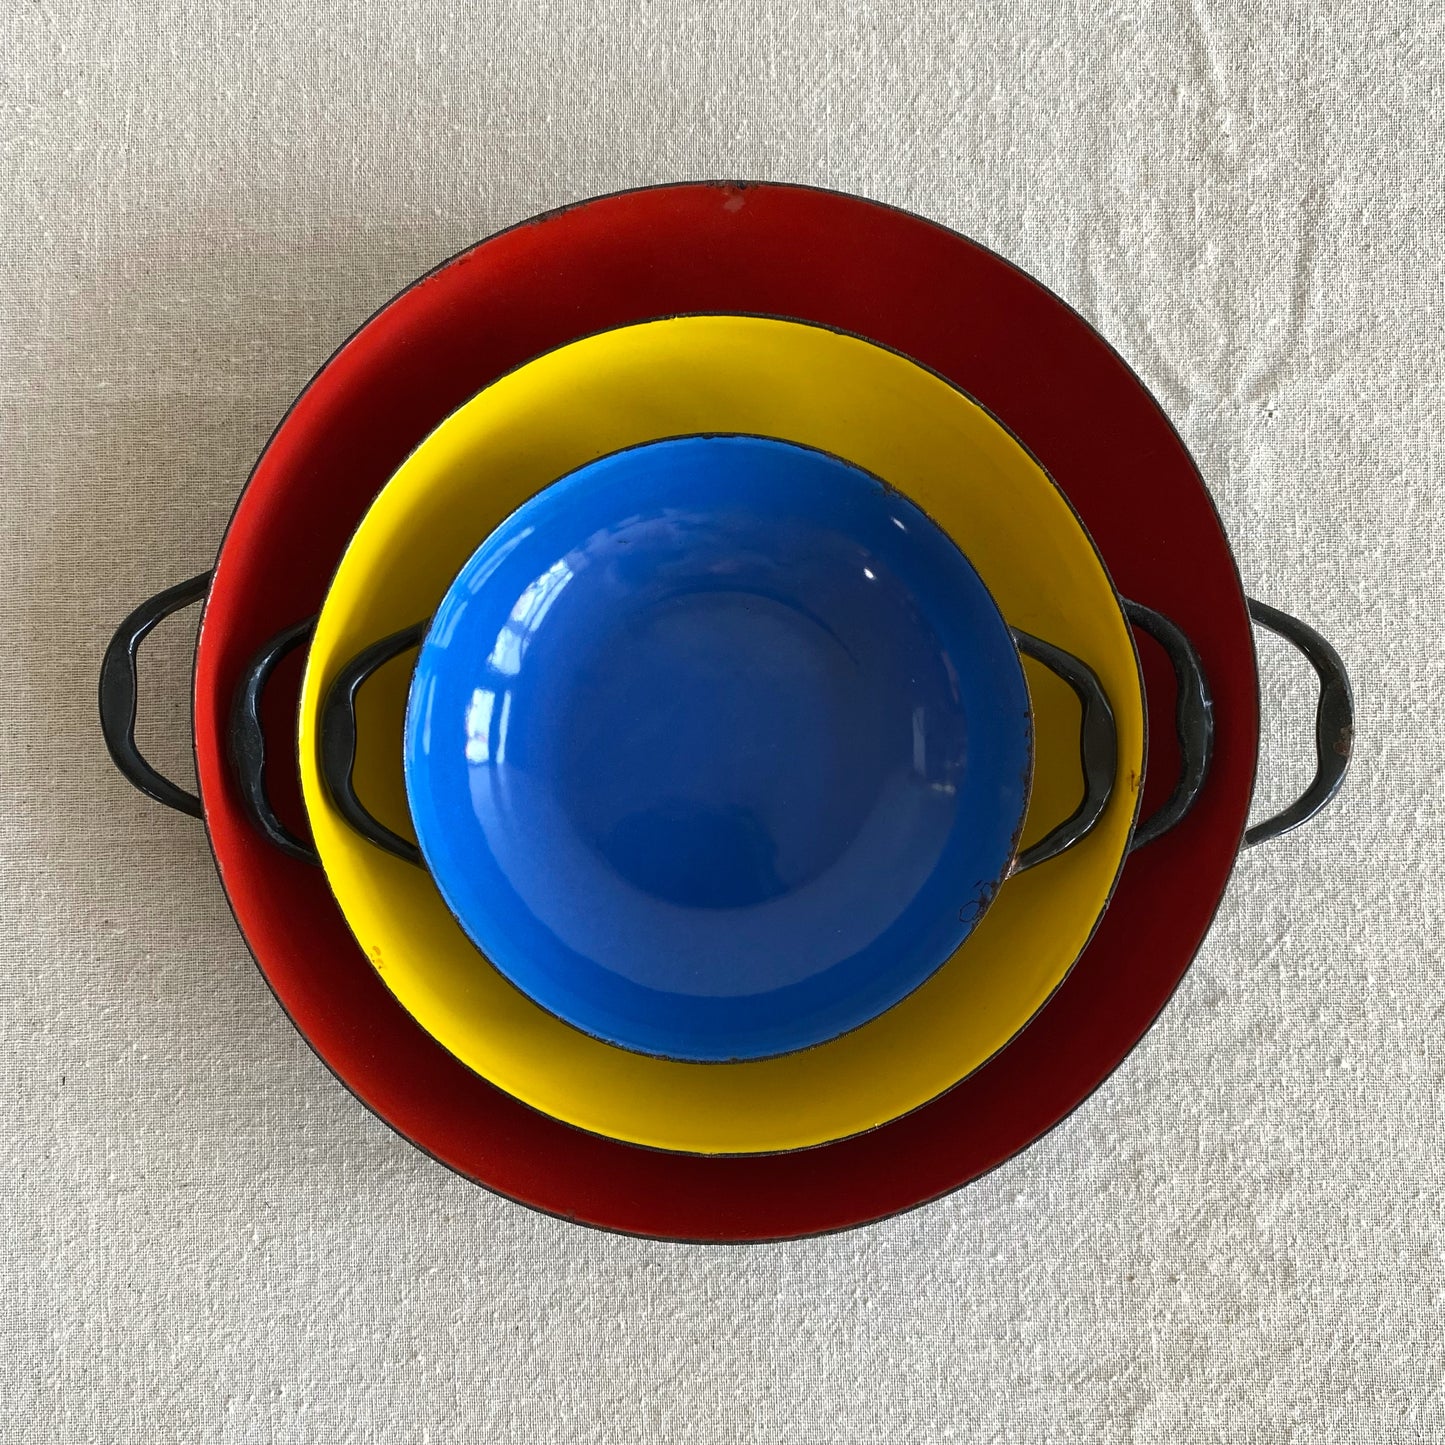 Set of 3 MCM Enamel Pans, Primary Colors